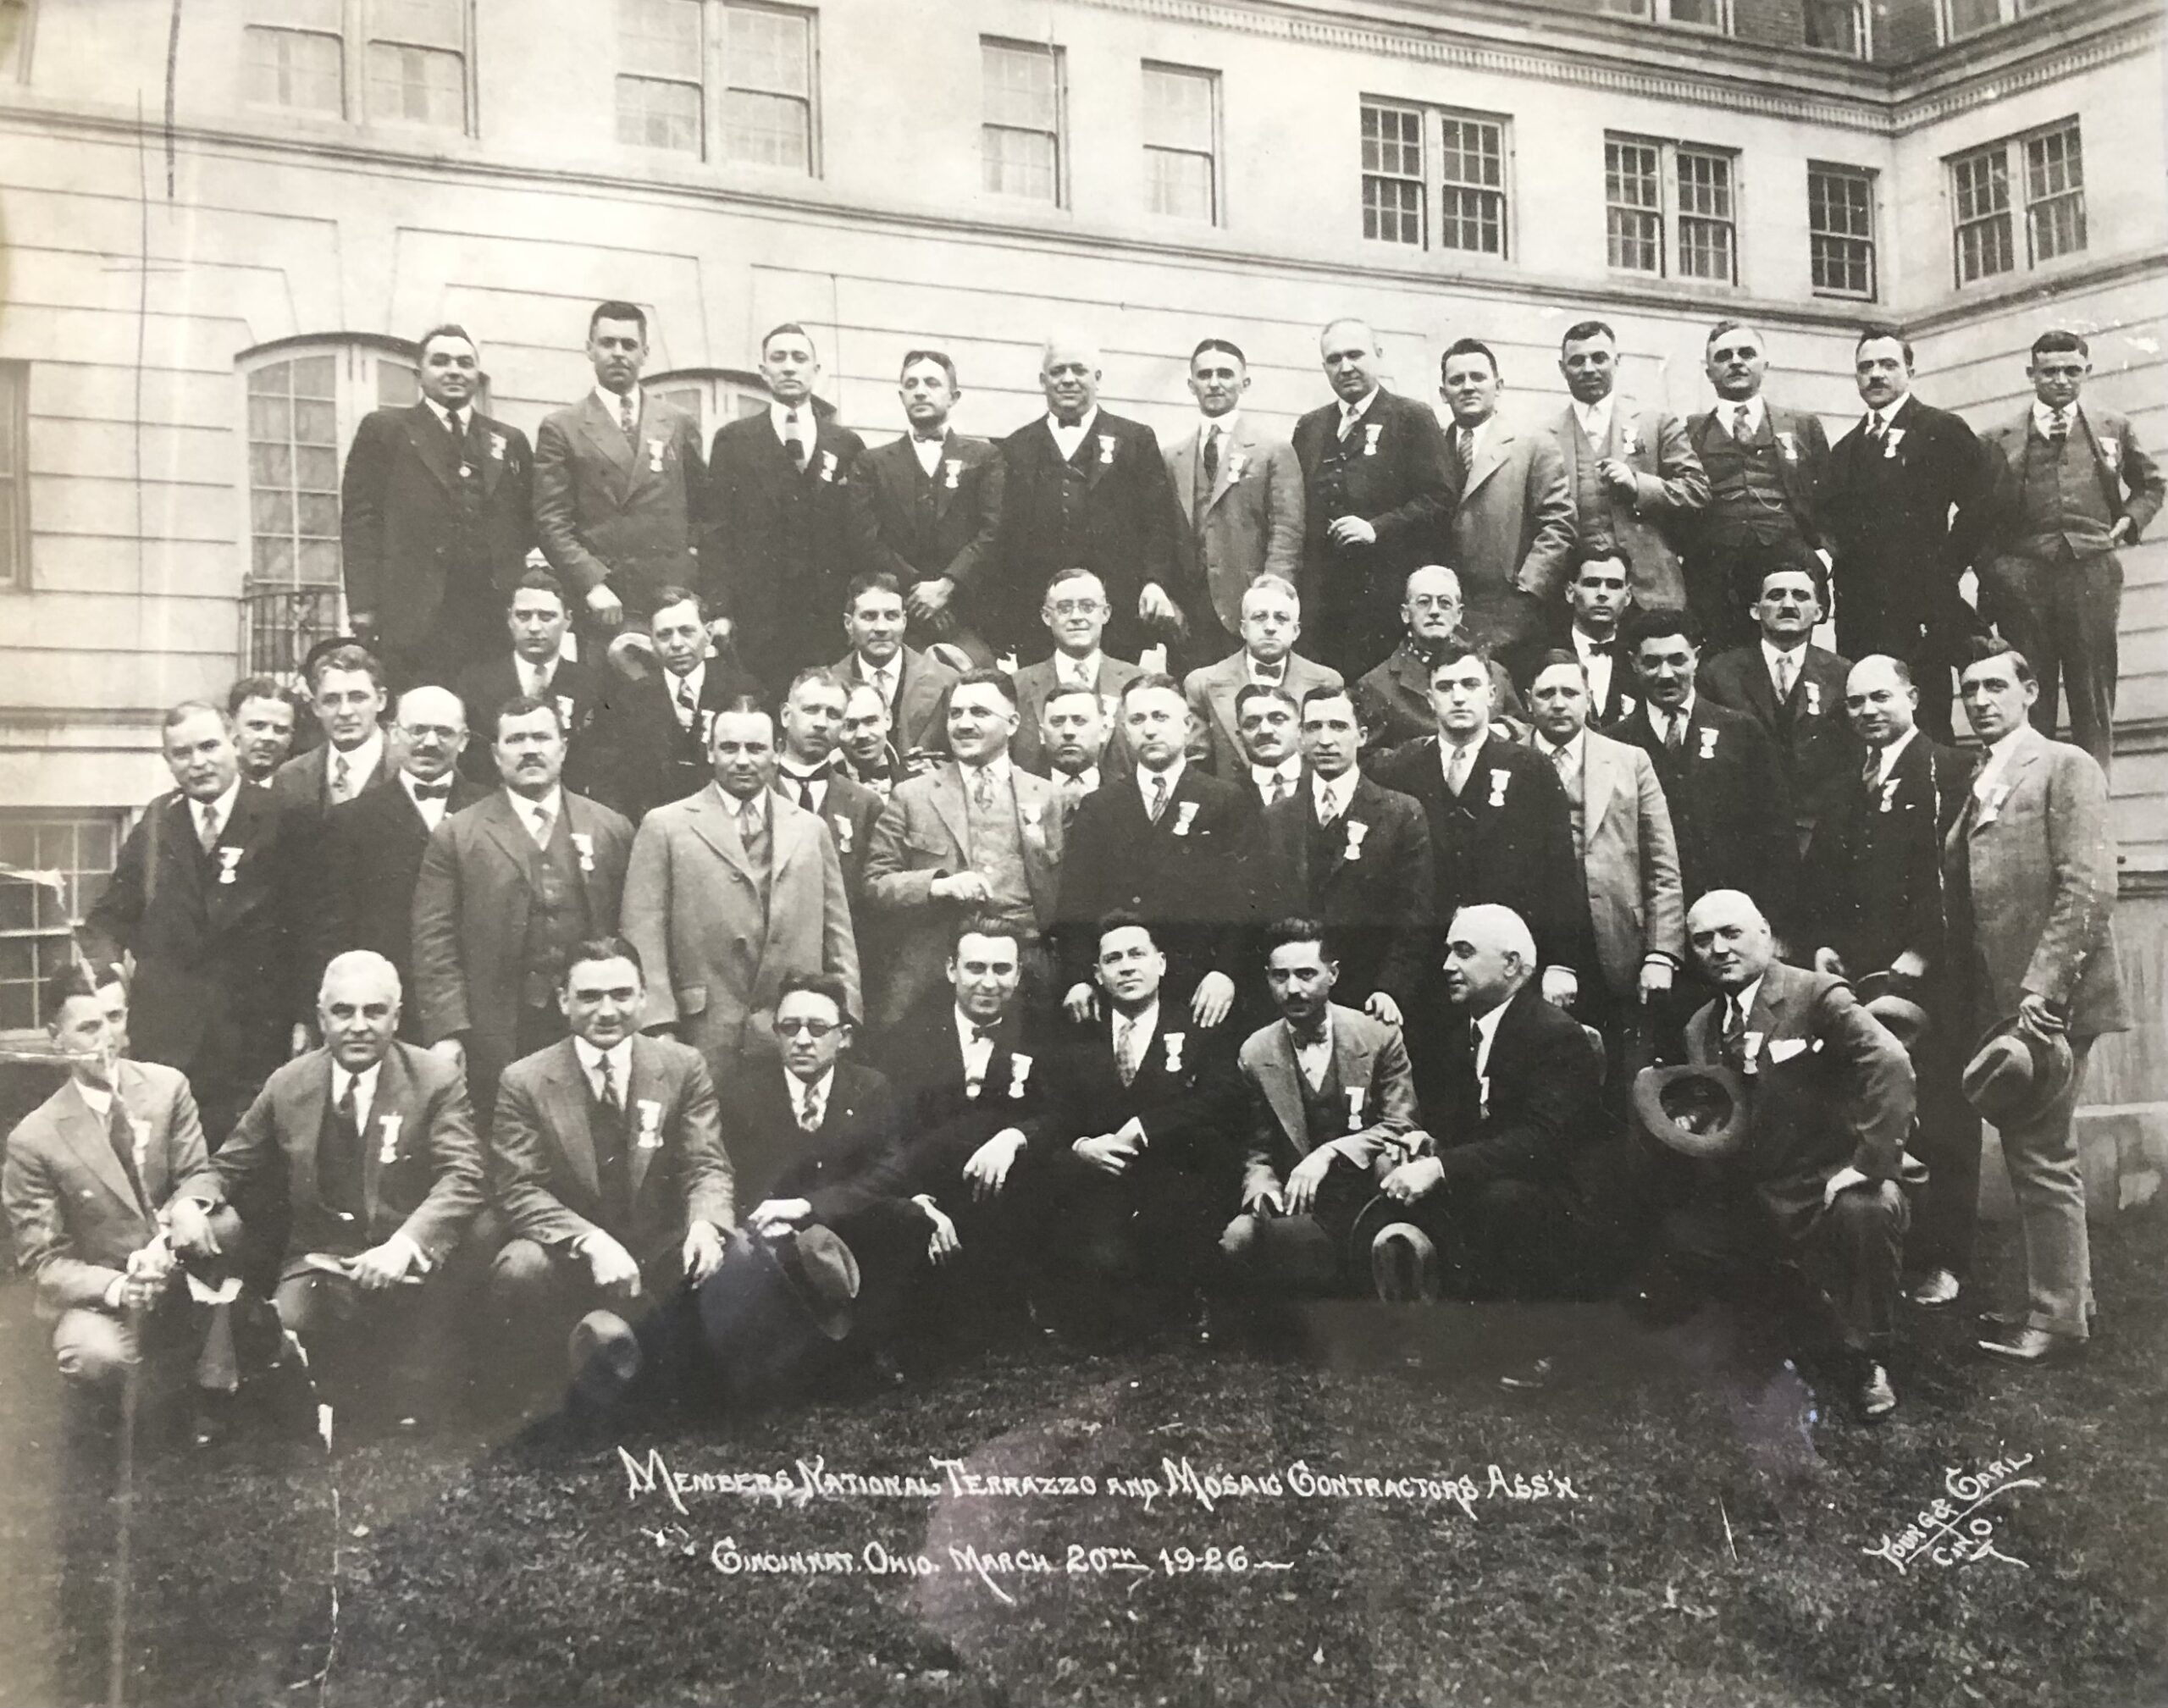 1926 3rd Convention Contractors